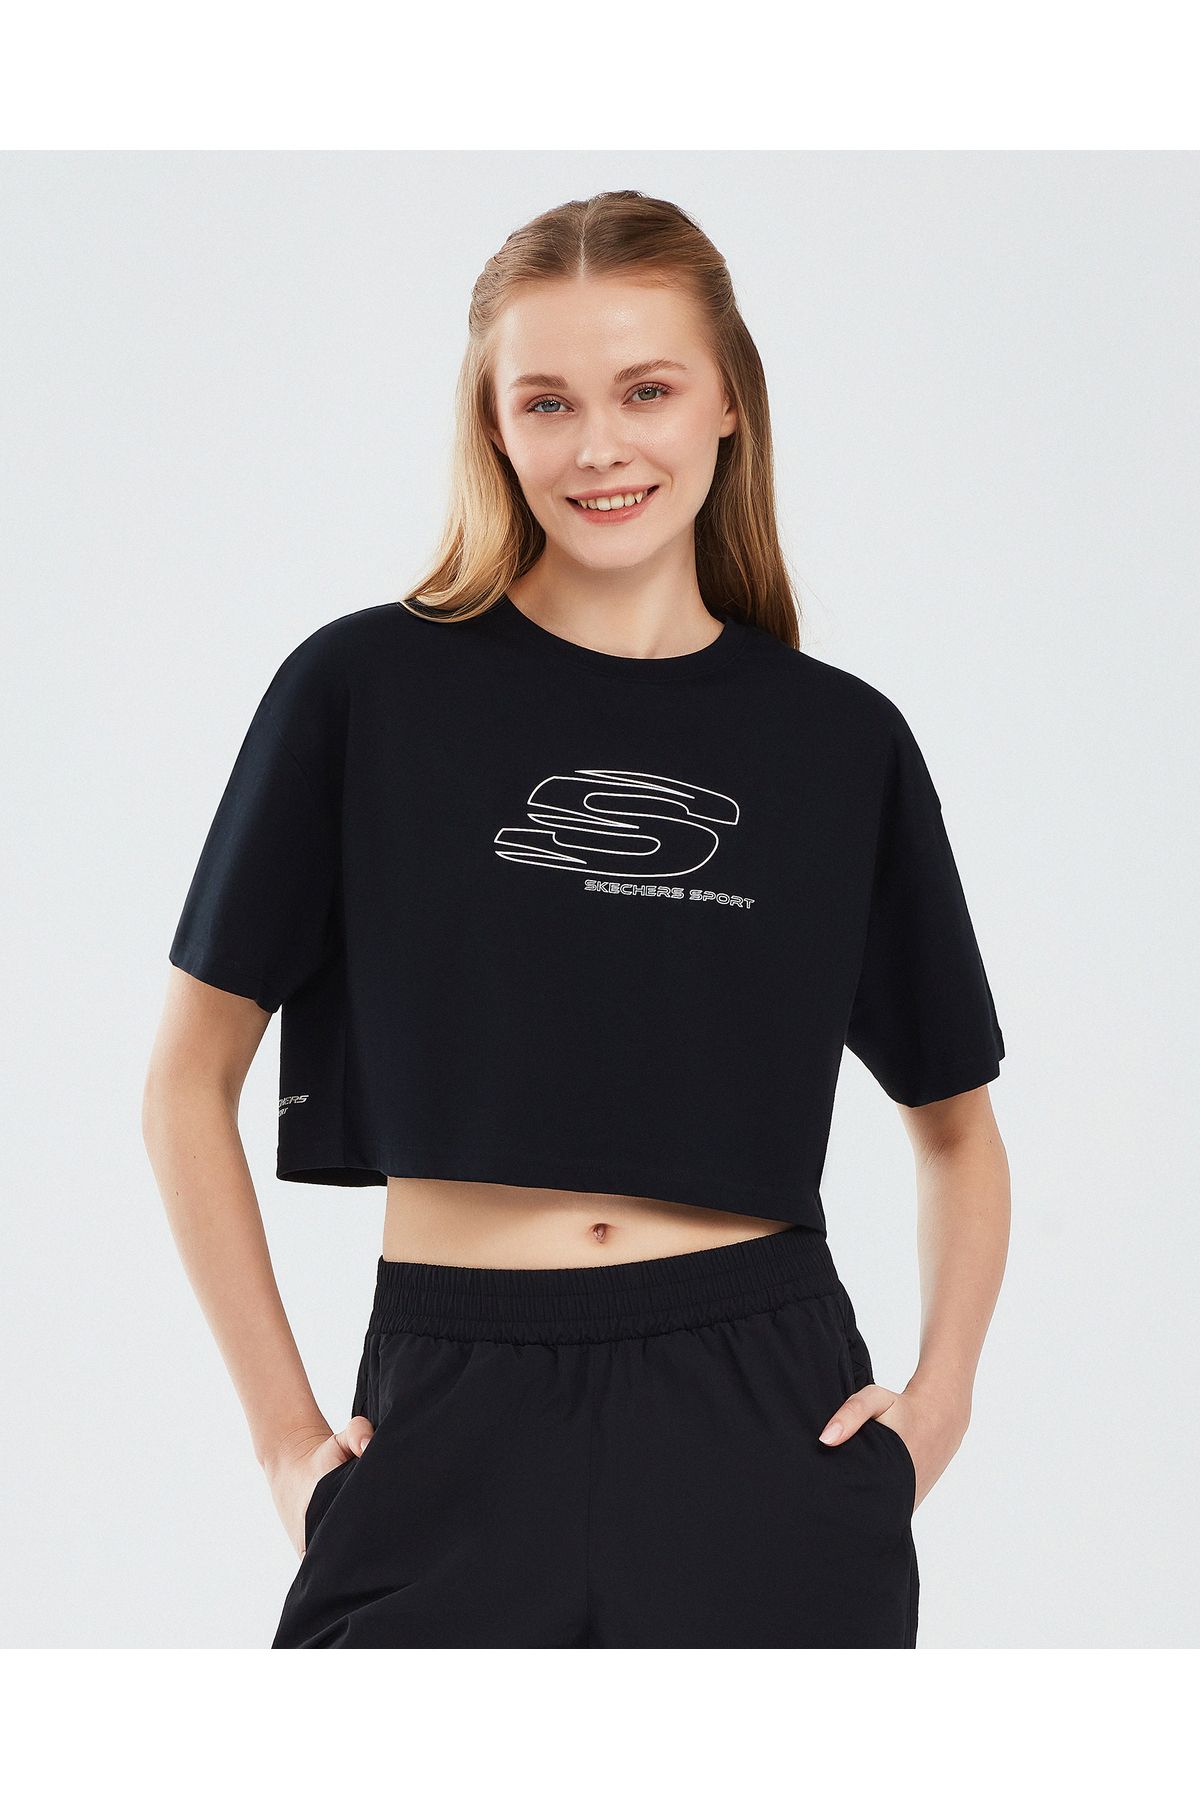 Skechers Graphic T-shirt W Short Sleeve Kadın Siyah Tshirt S241014-001